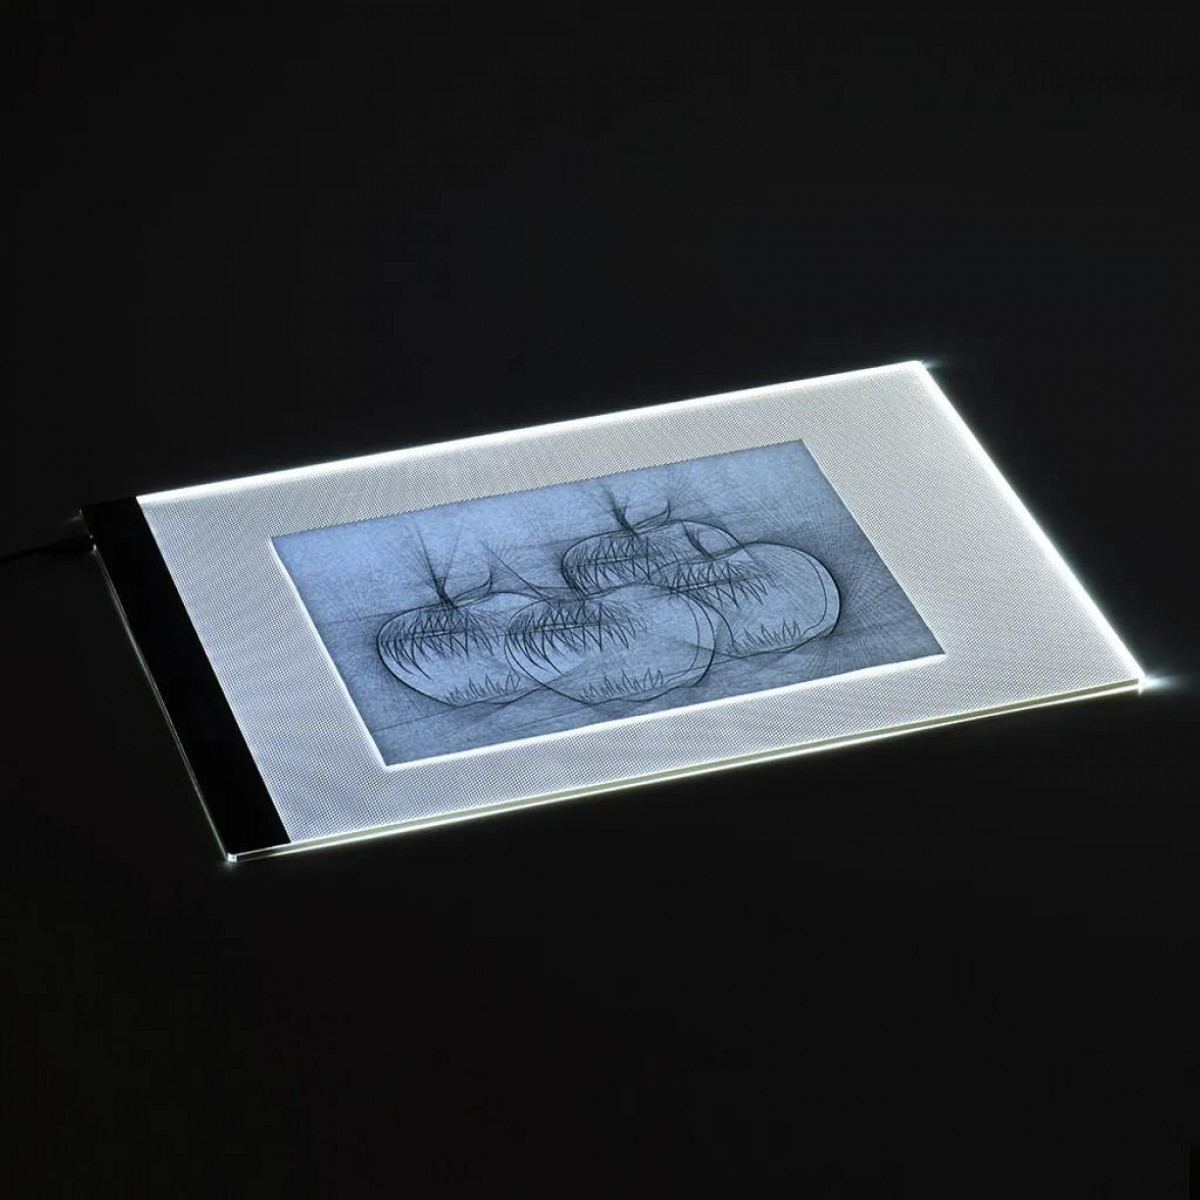 INF LED Zeichenbrett mit USB Grafiktablett Leuchttisch A4